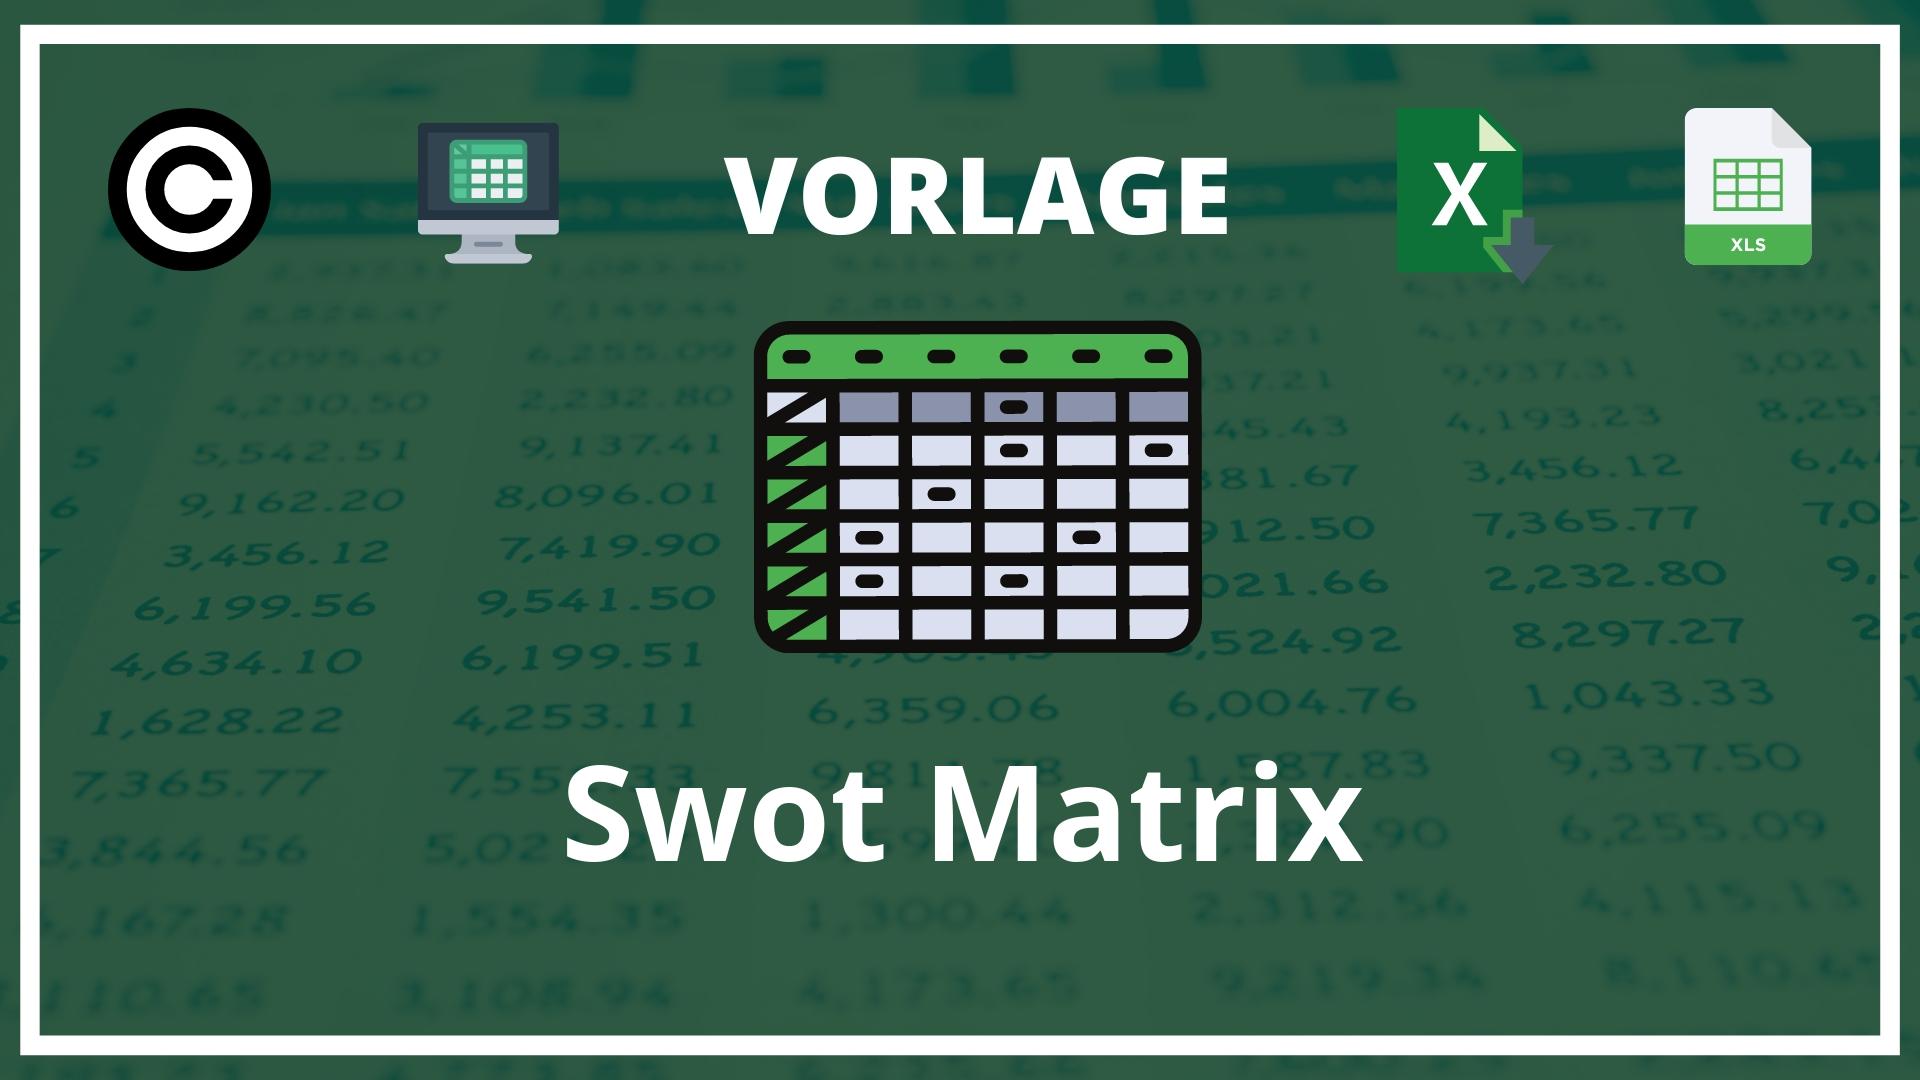 Swot Matrix Vorlage Excel